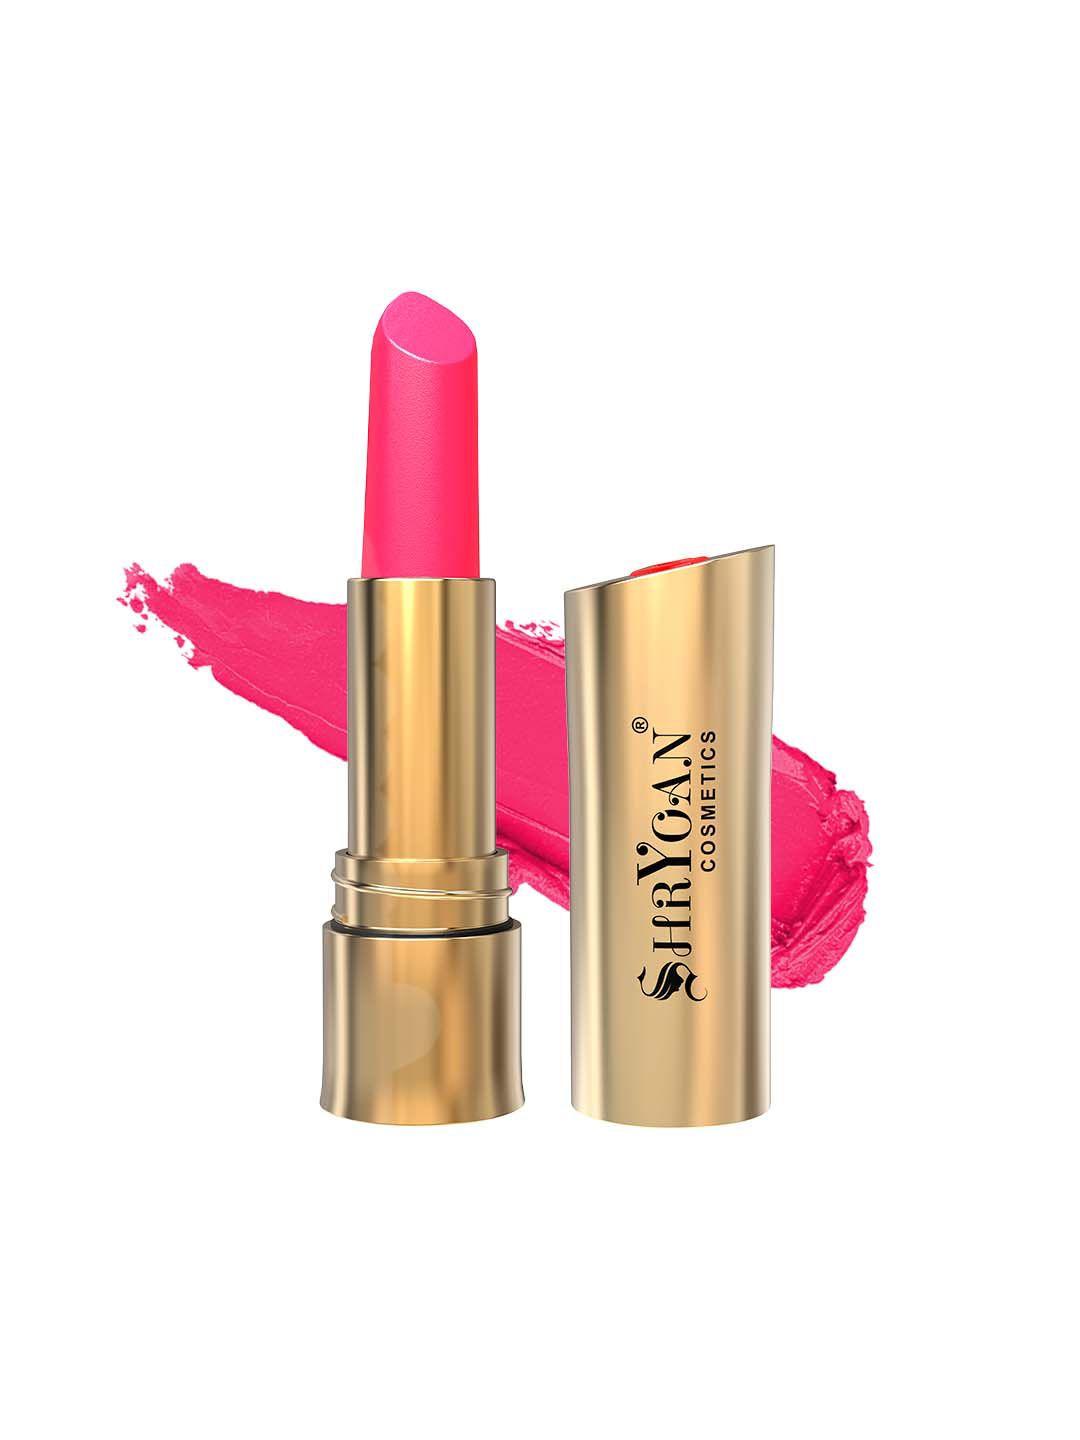 shryoan matte longlasting non transfer lipstick - pink fever - 3.8 gm